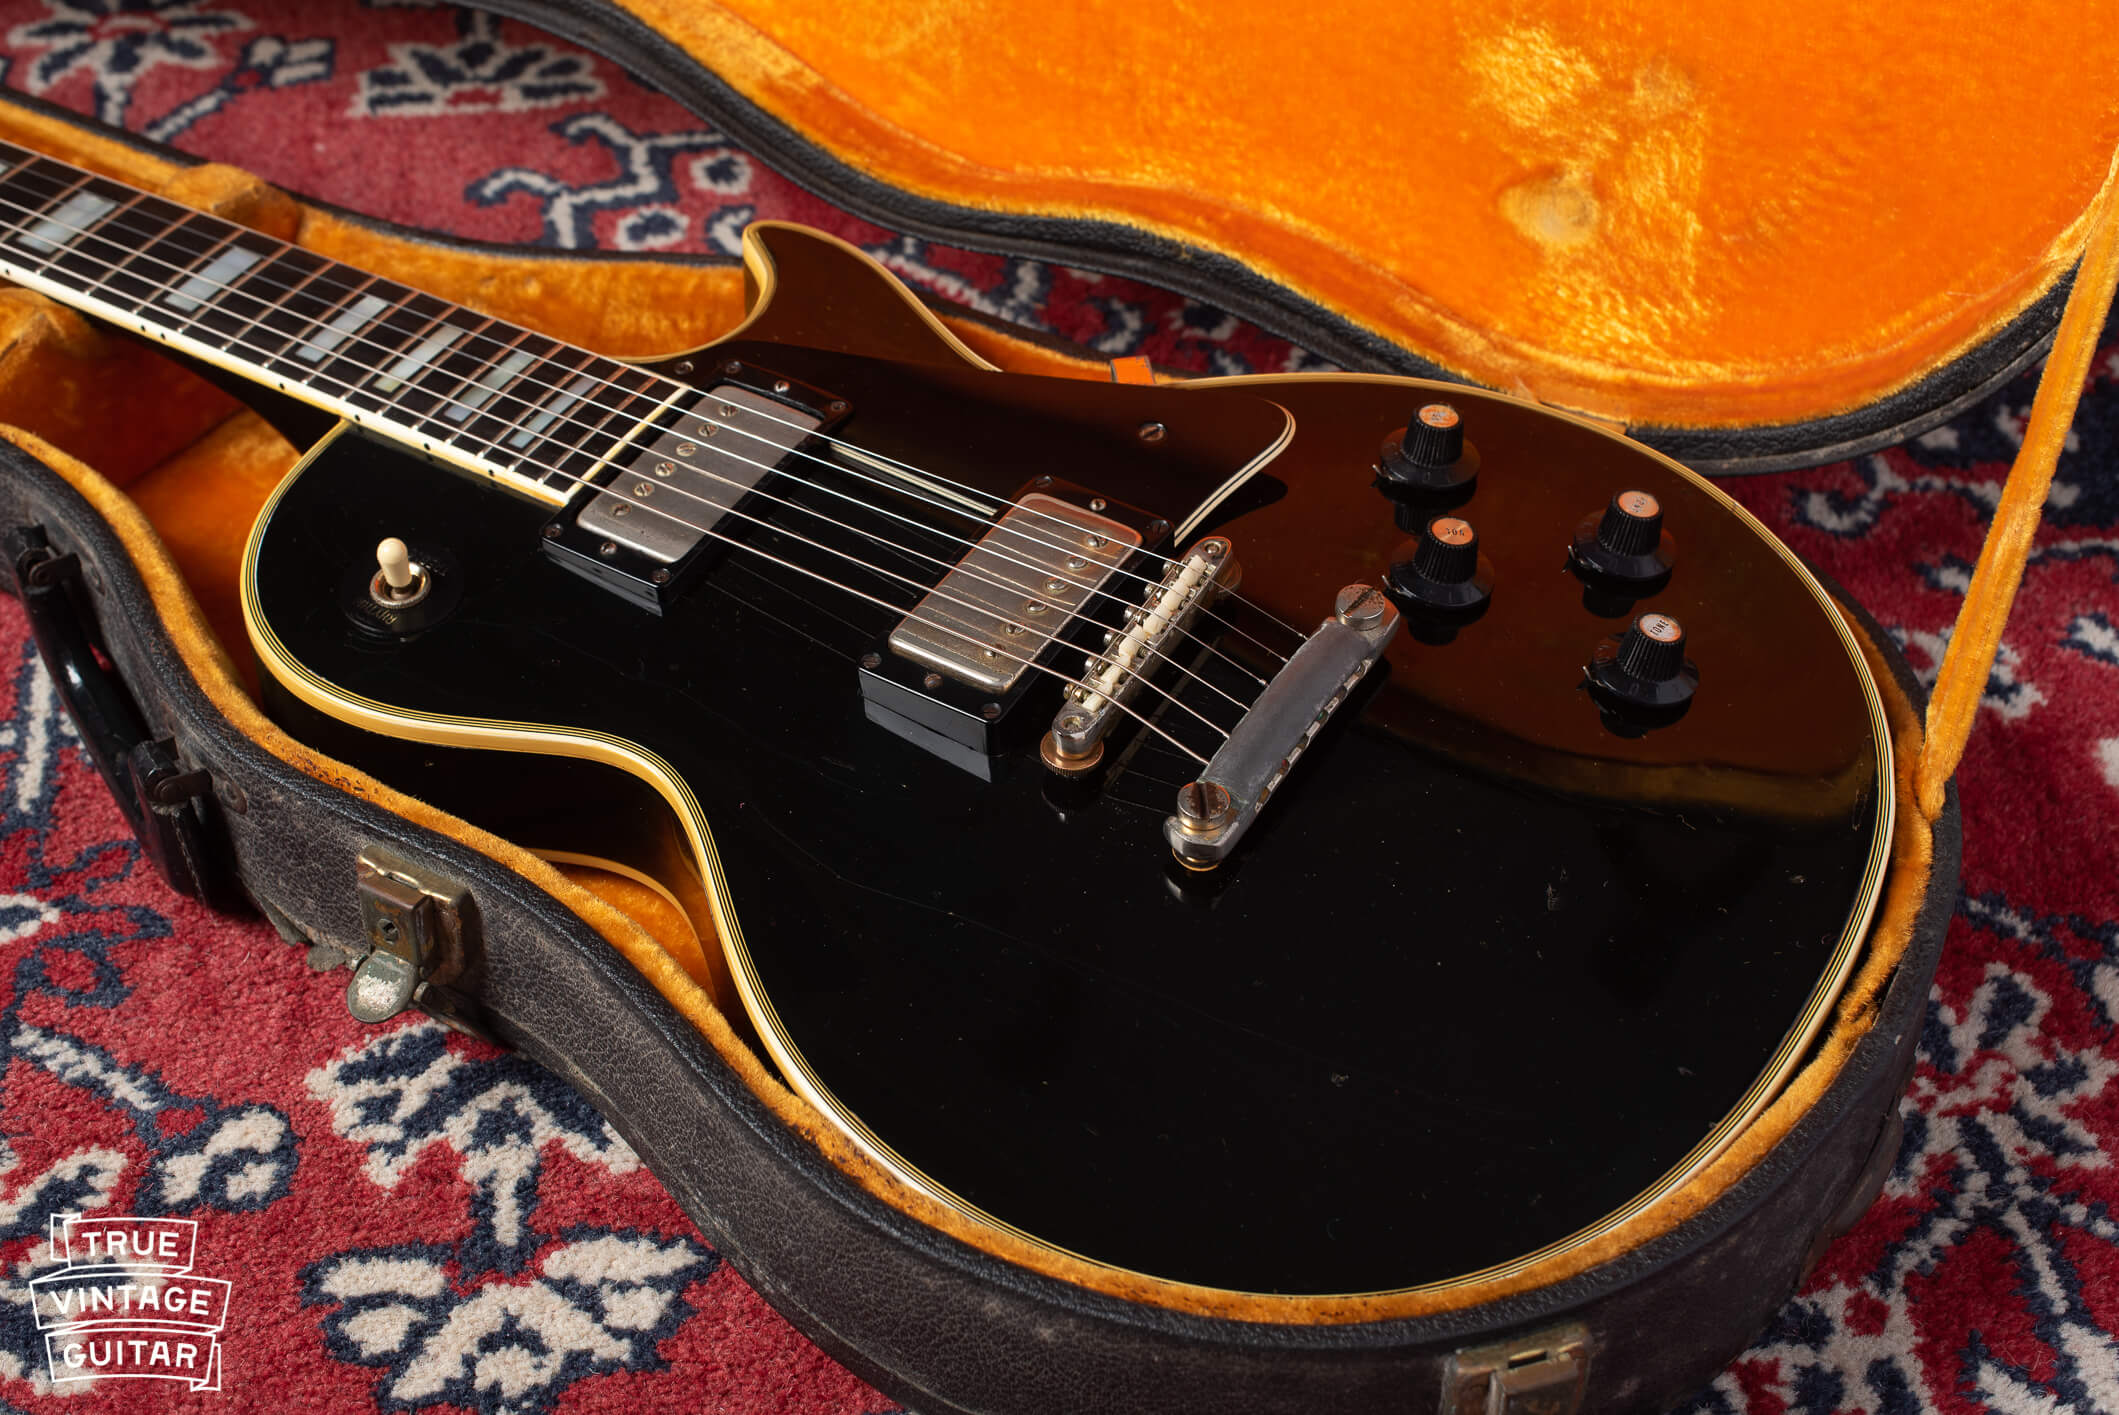 Black Gibson Les Paul Custom guitar 1960s